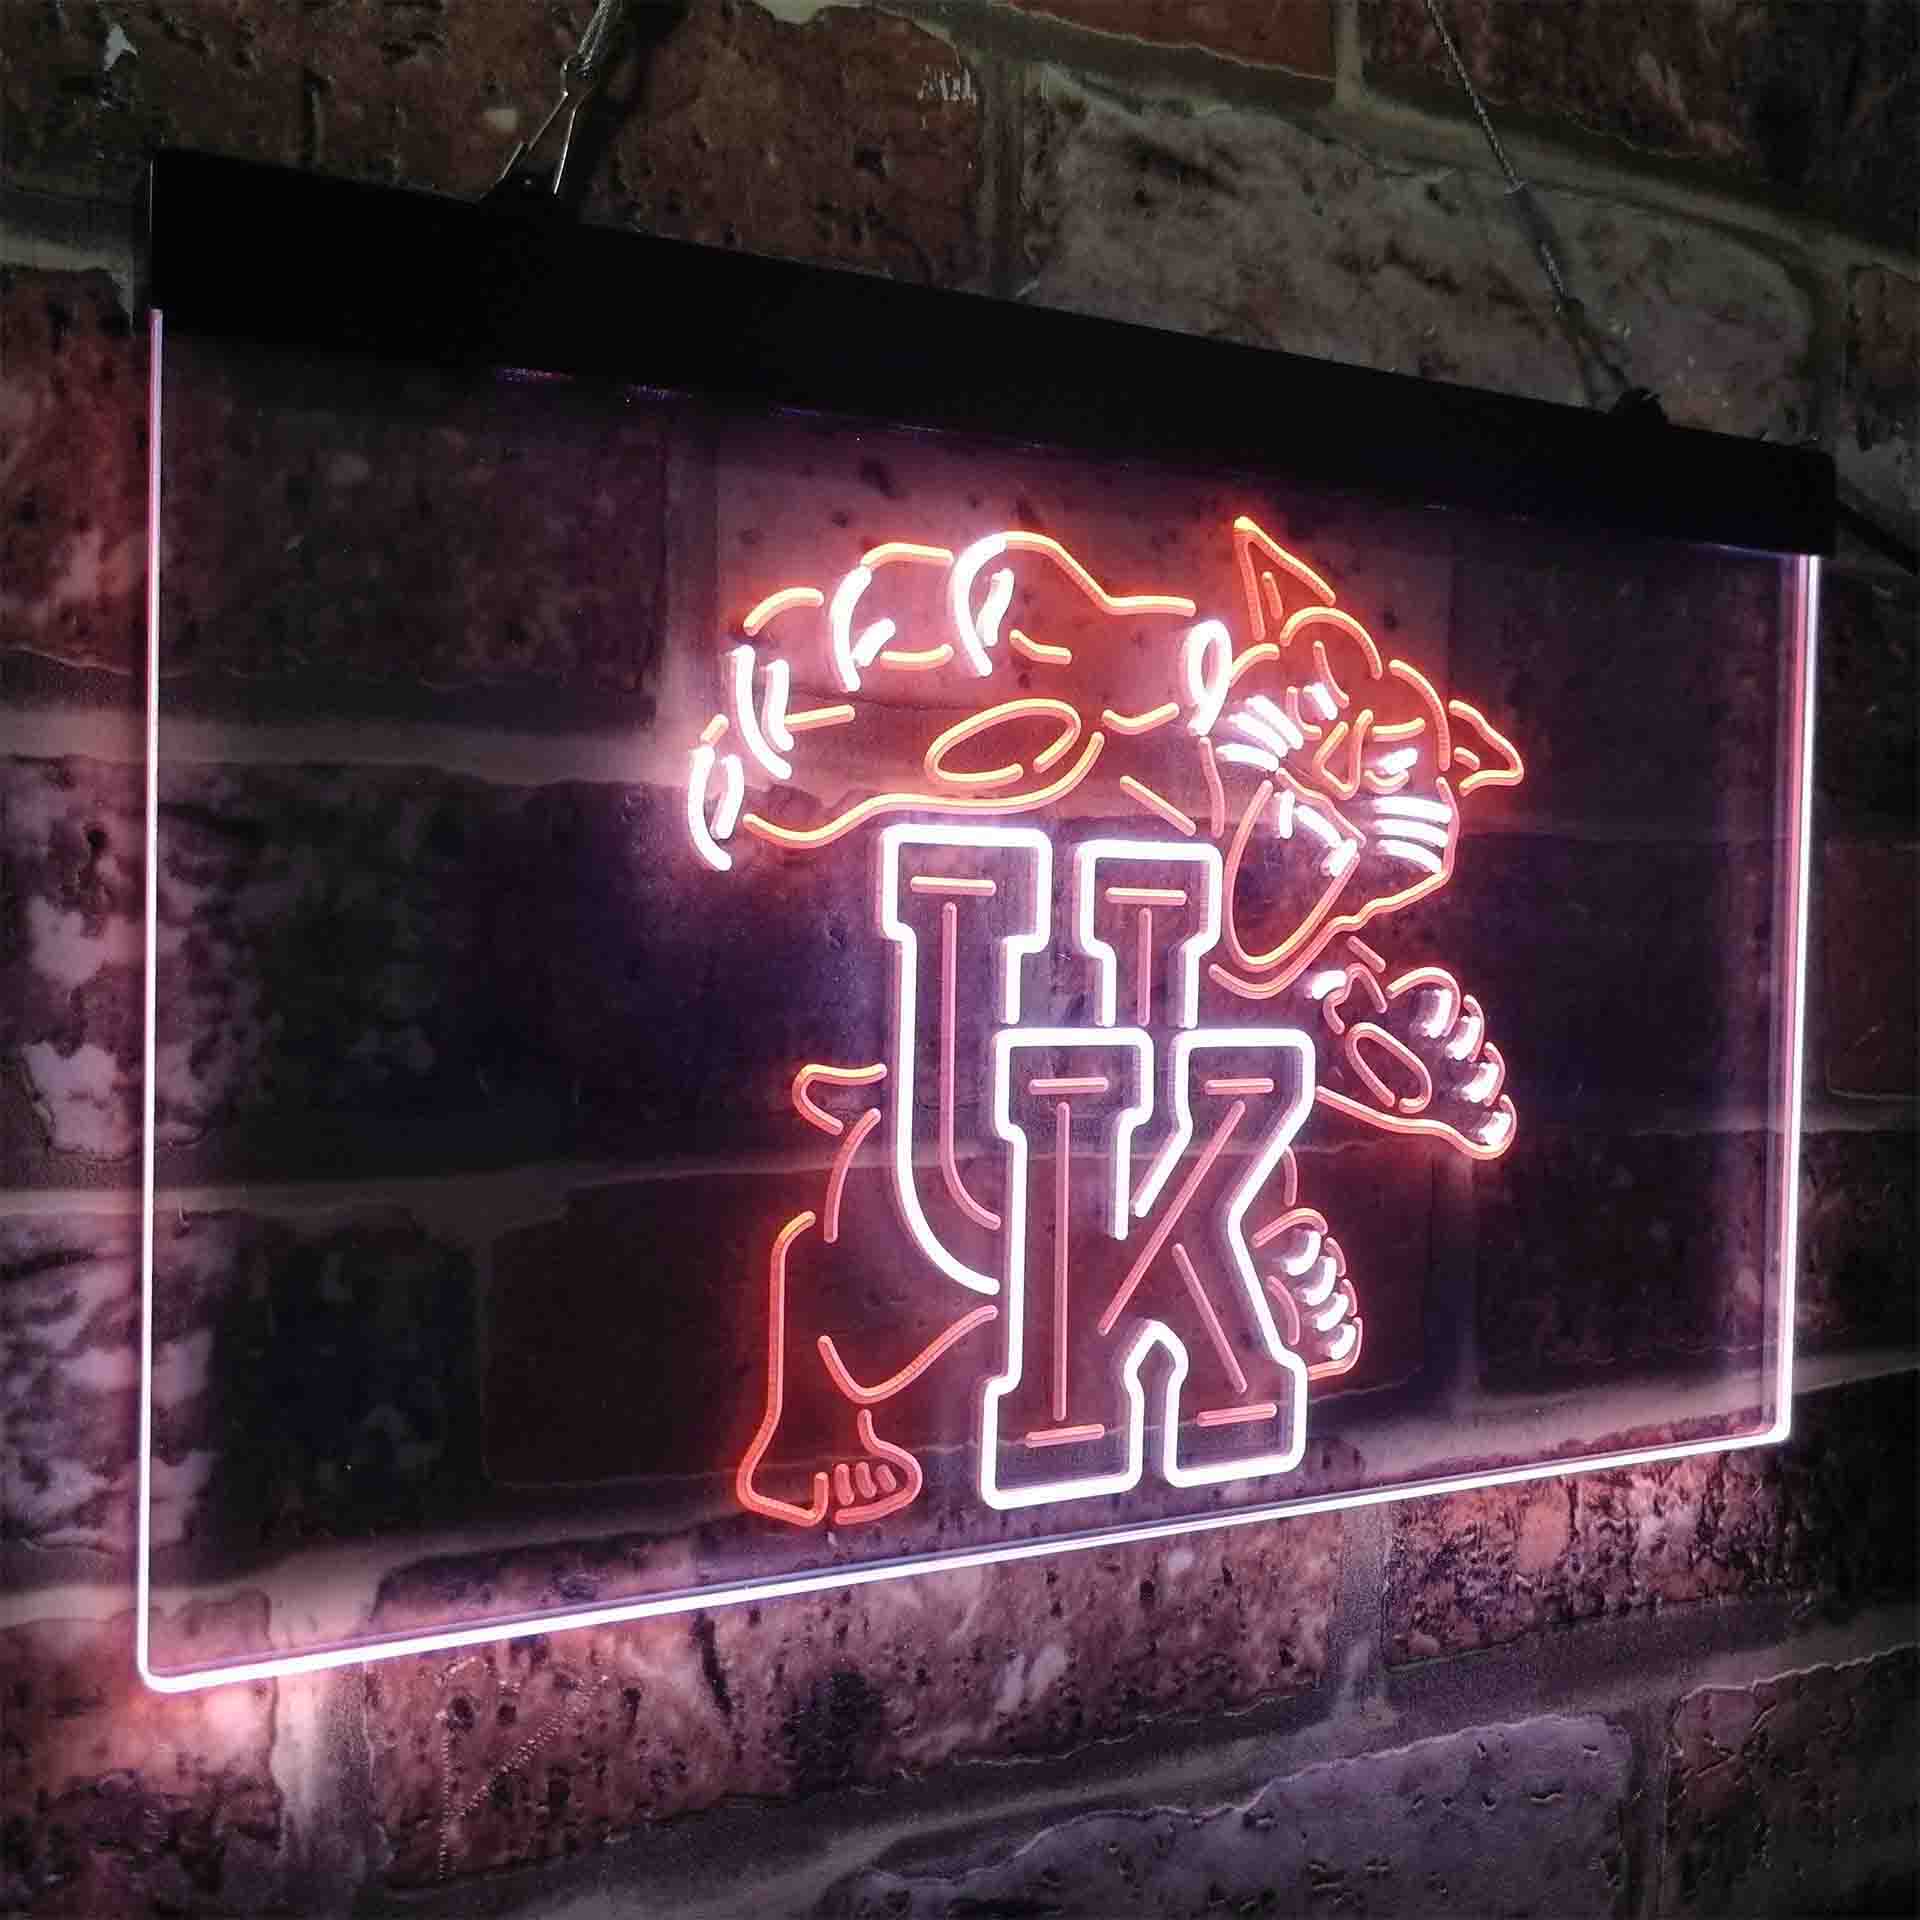 Kentuckys Sport Club League Team Wilds Cats LED Neon Sign